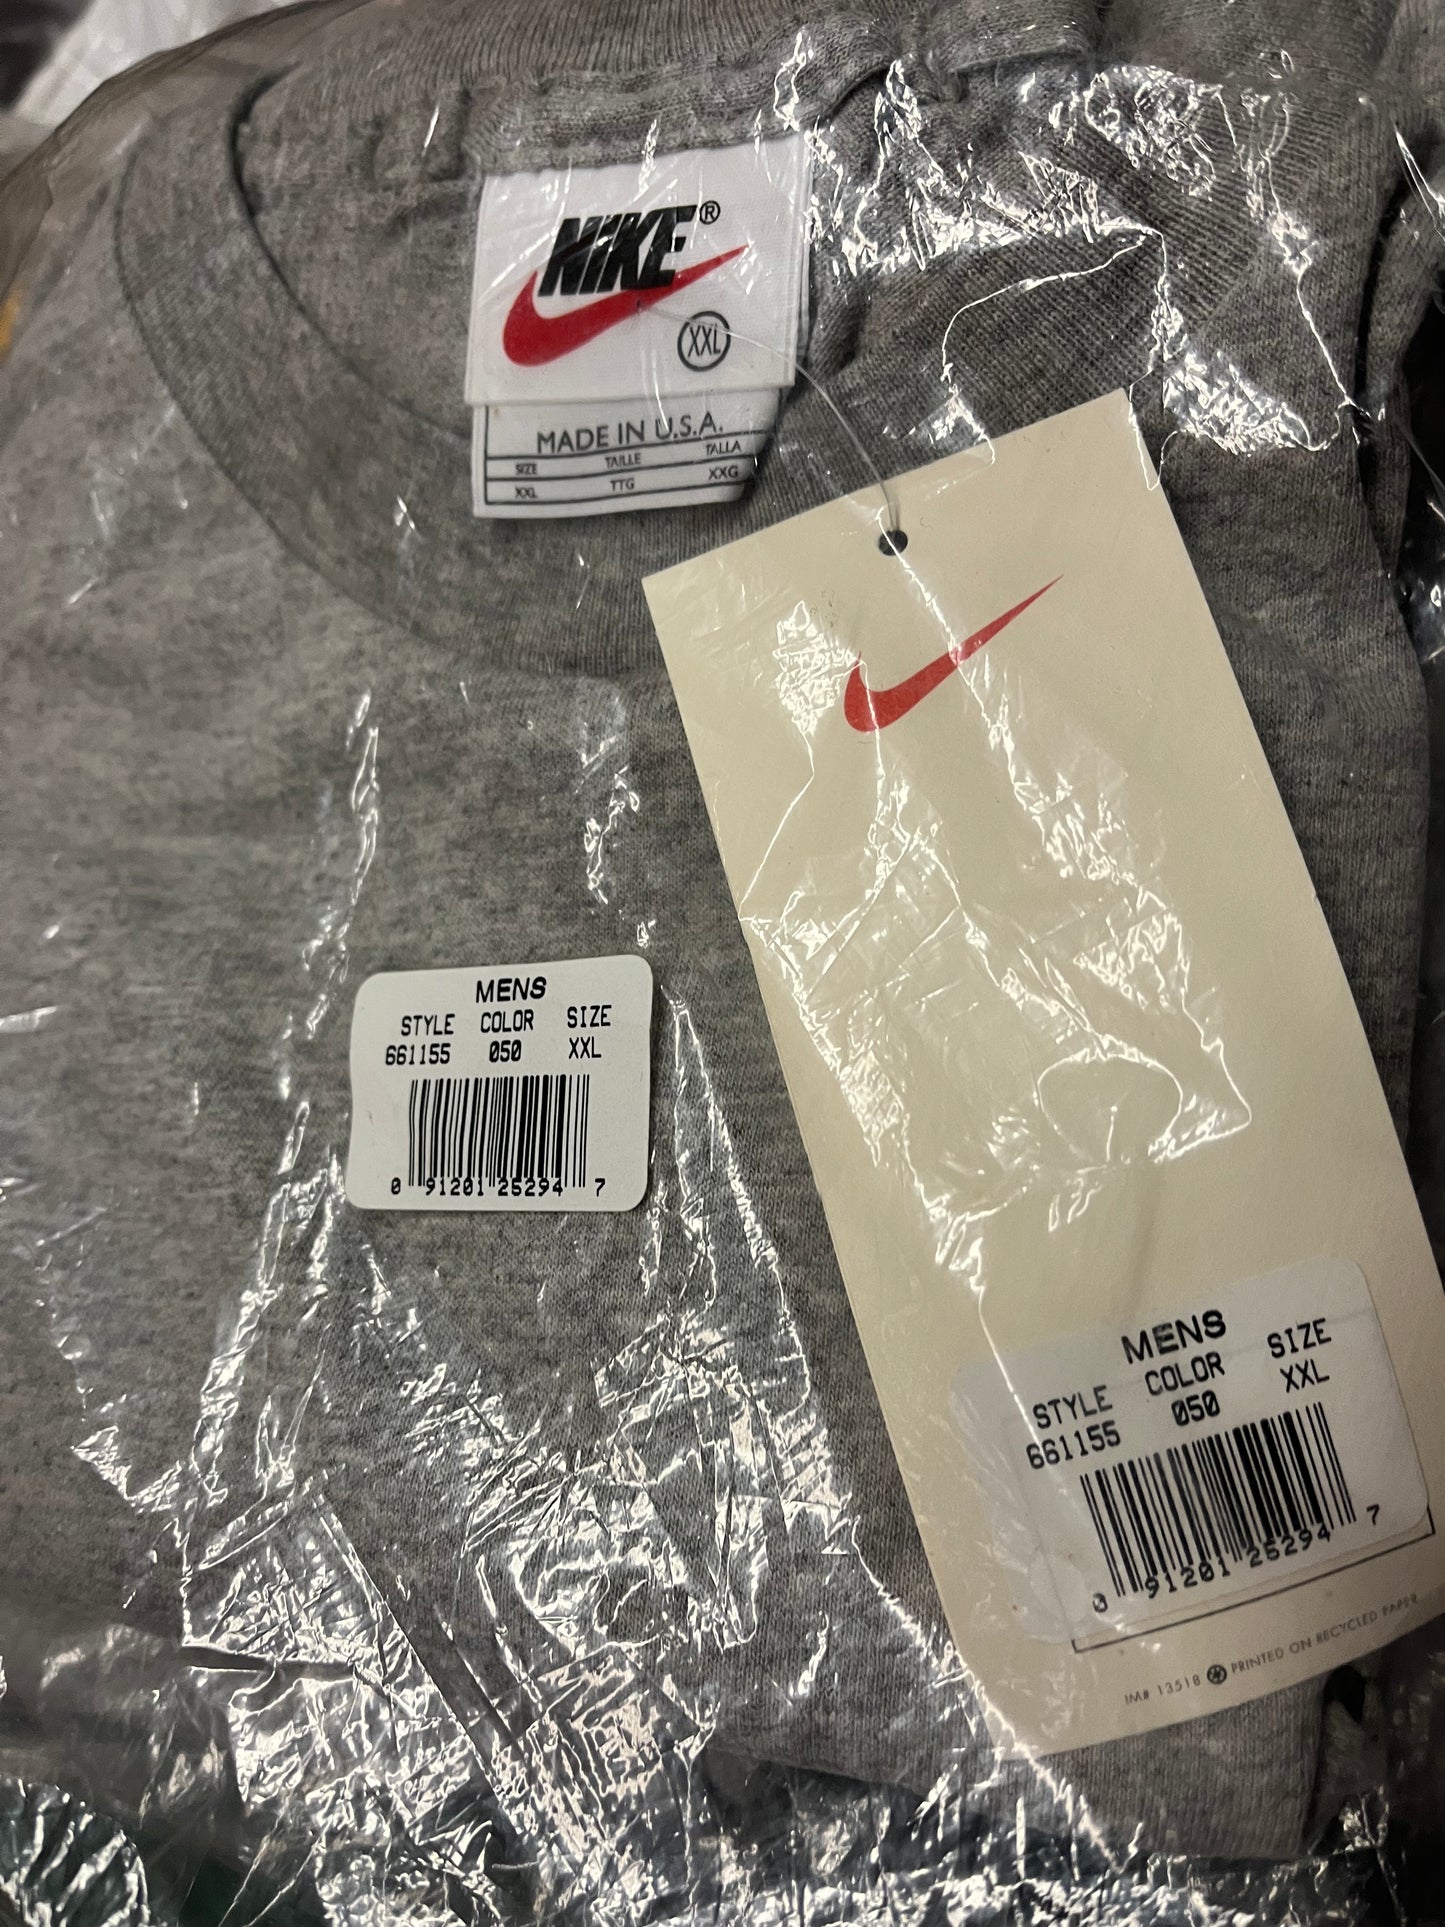 SZ 2XL  Vintage Nike Griffey T-Shirt.